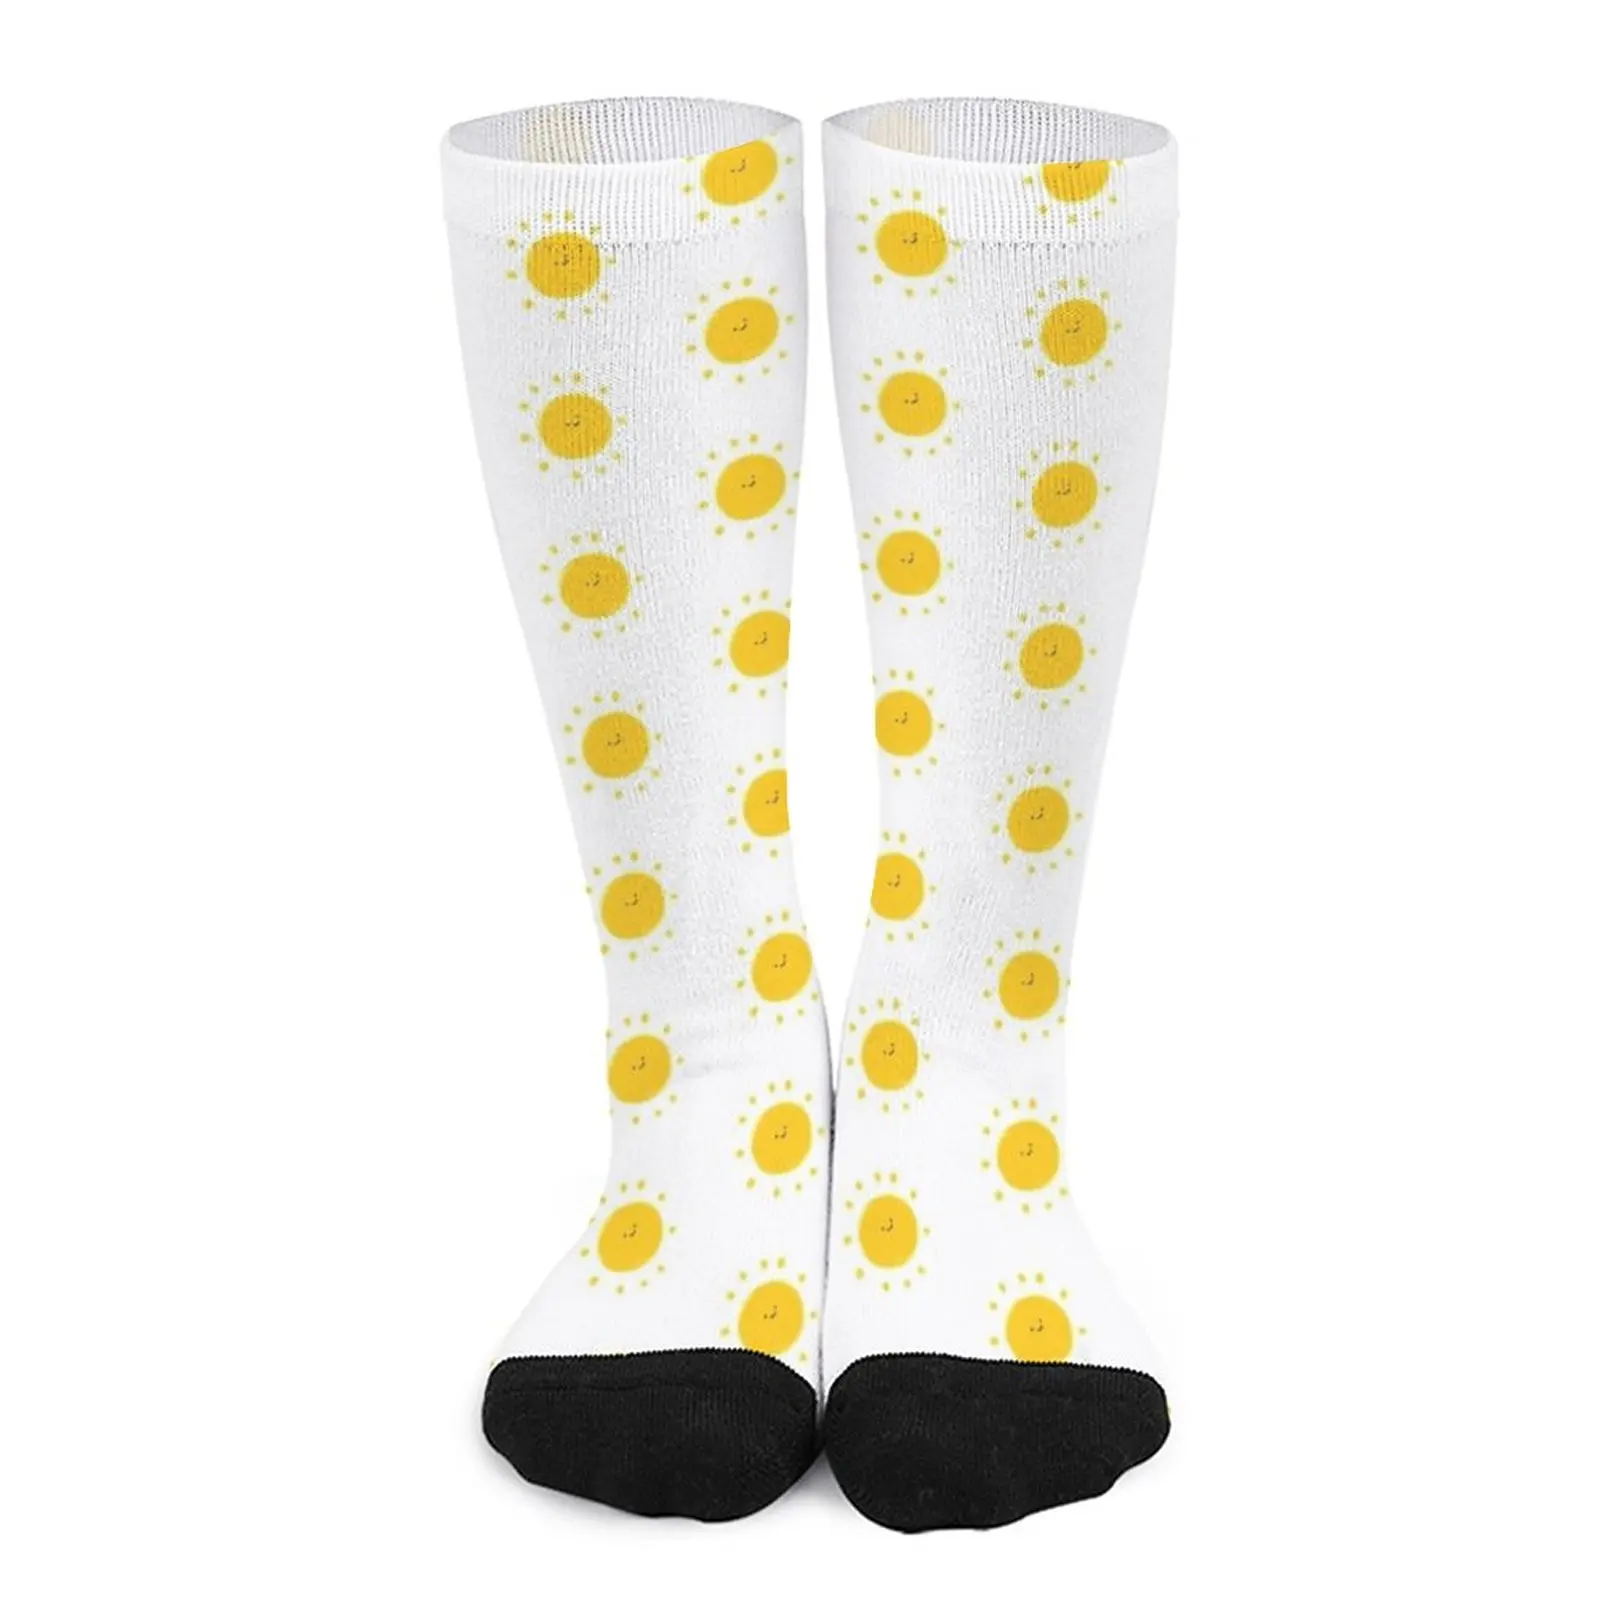 Mr. Sunshine Socks Woman socks socks aesthetic compression socks men riviera sunshine